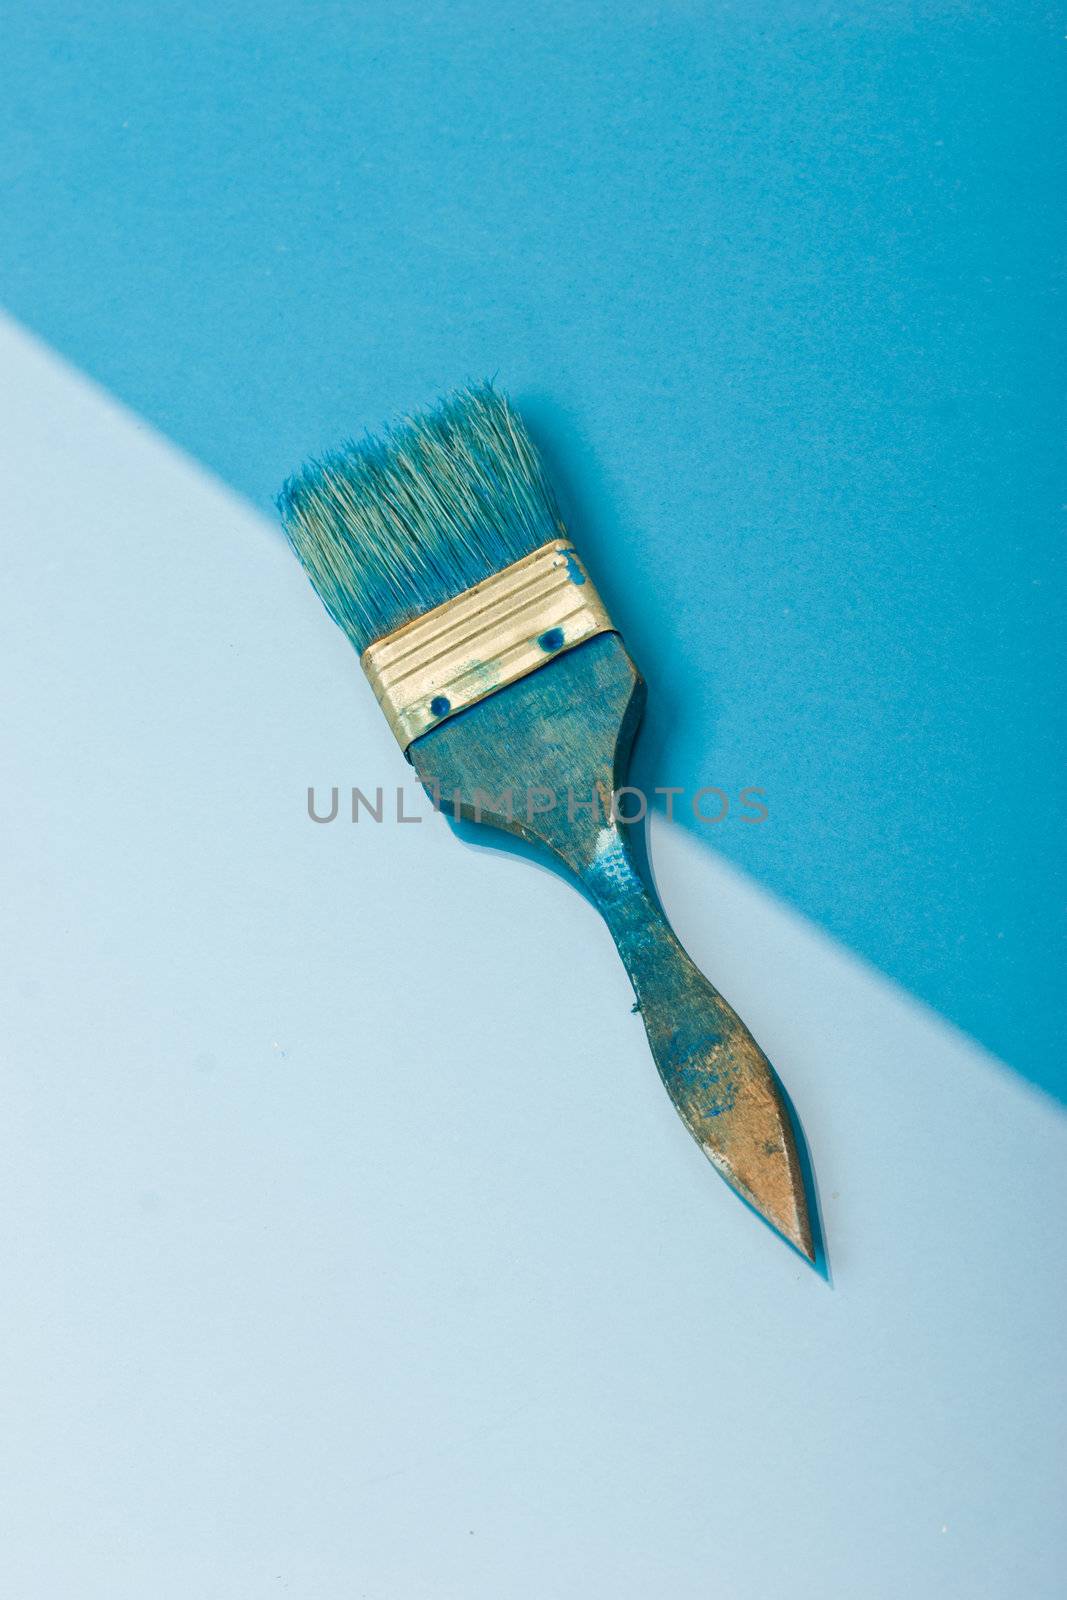 blue paint brush on the blue background